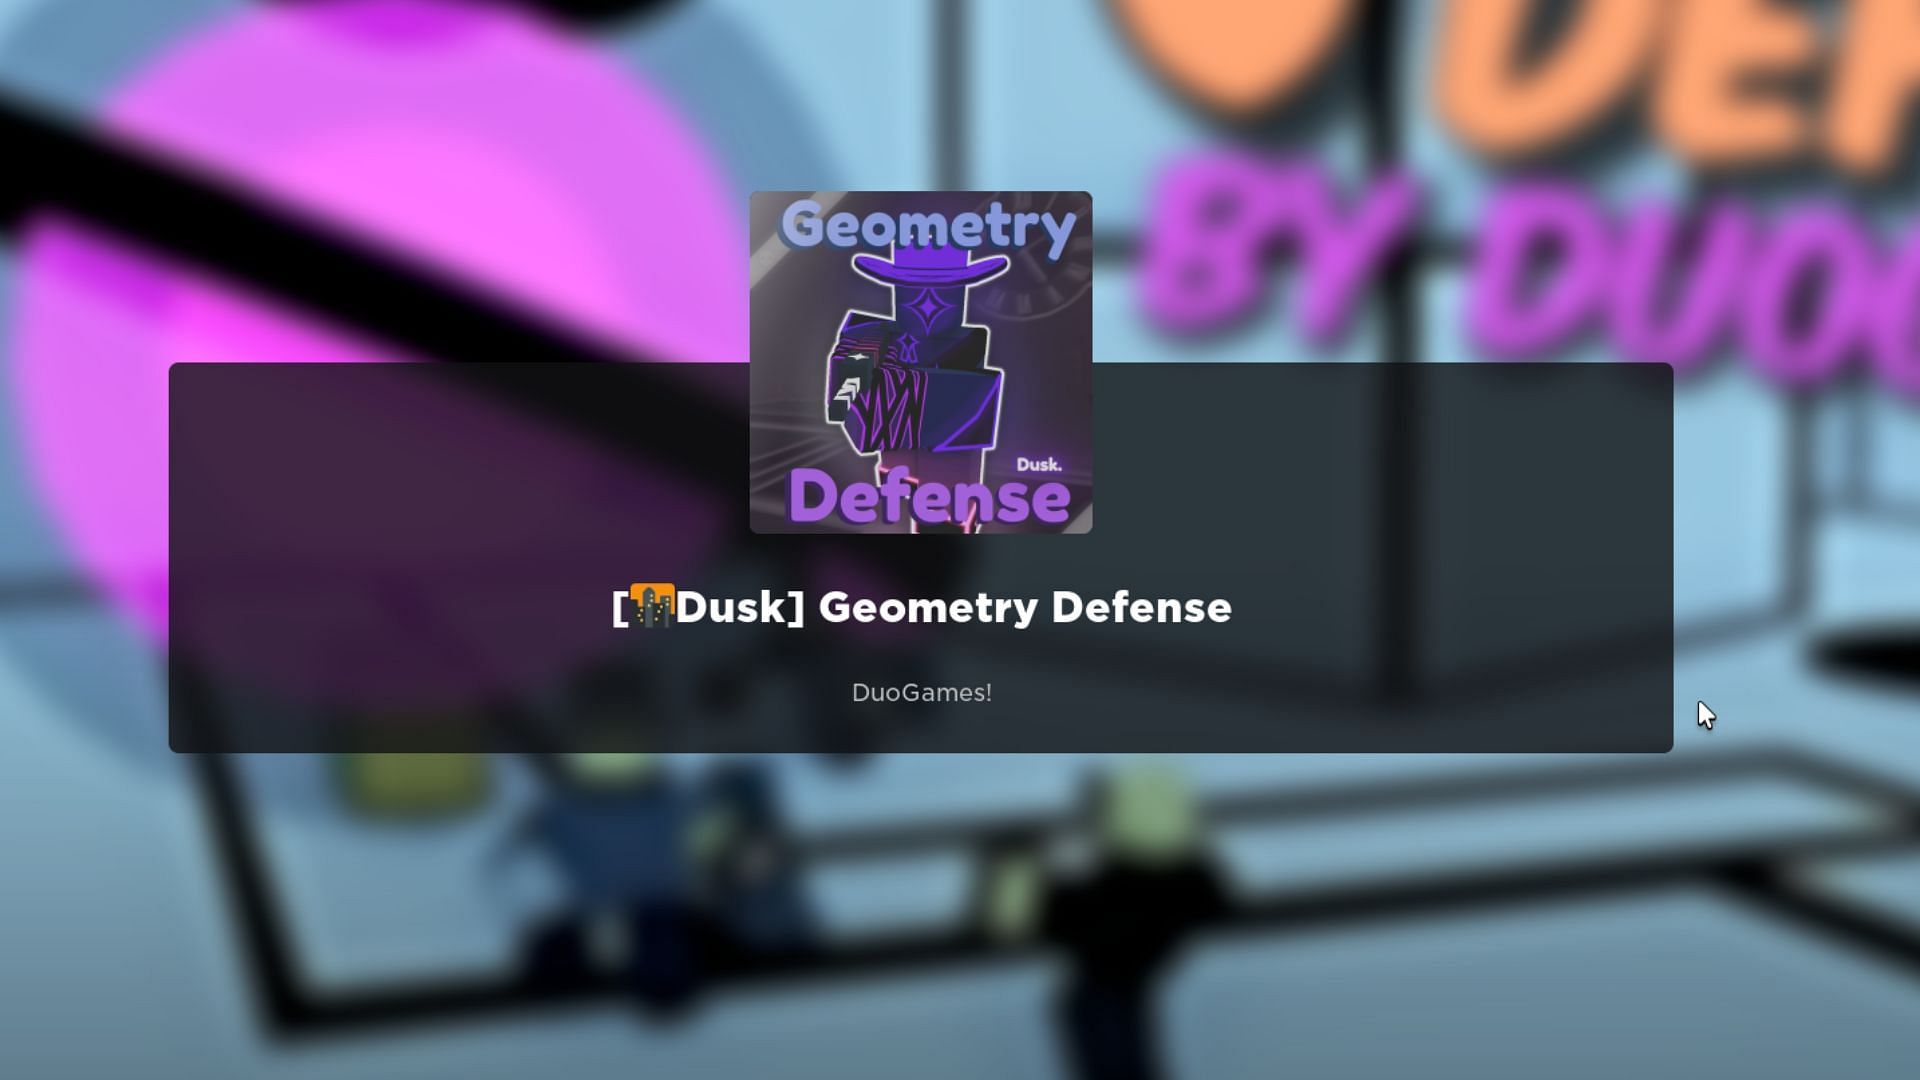 Geometry Defense Codes